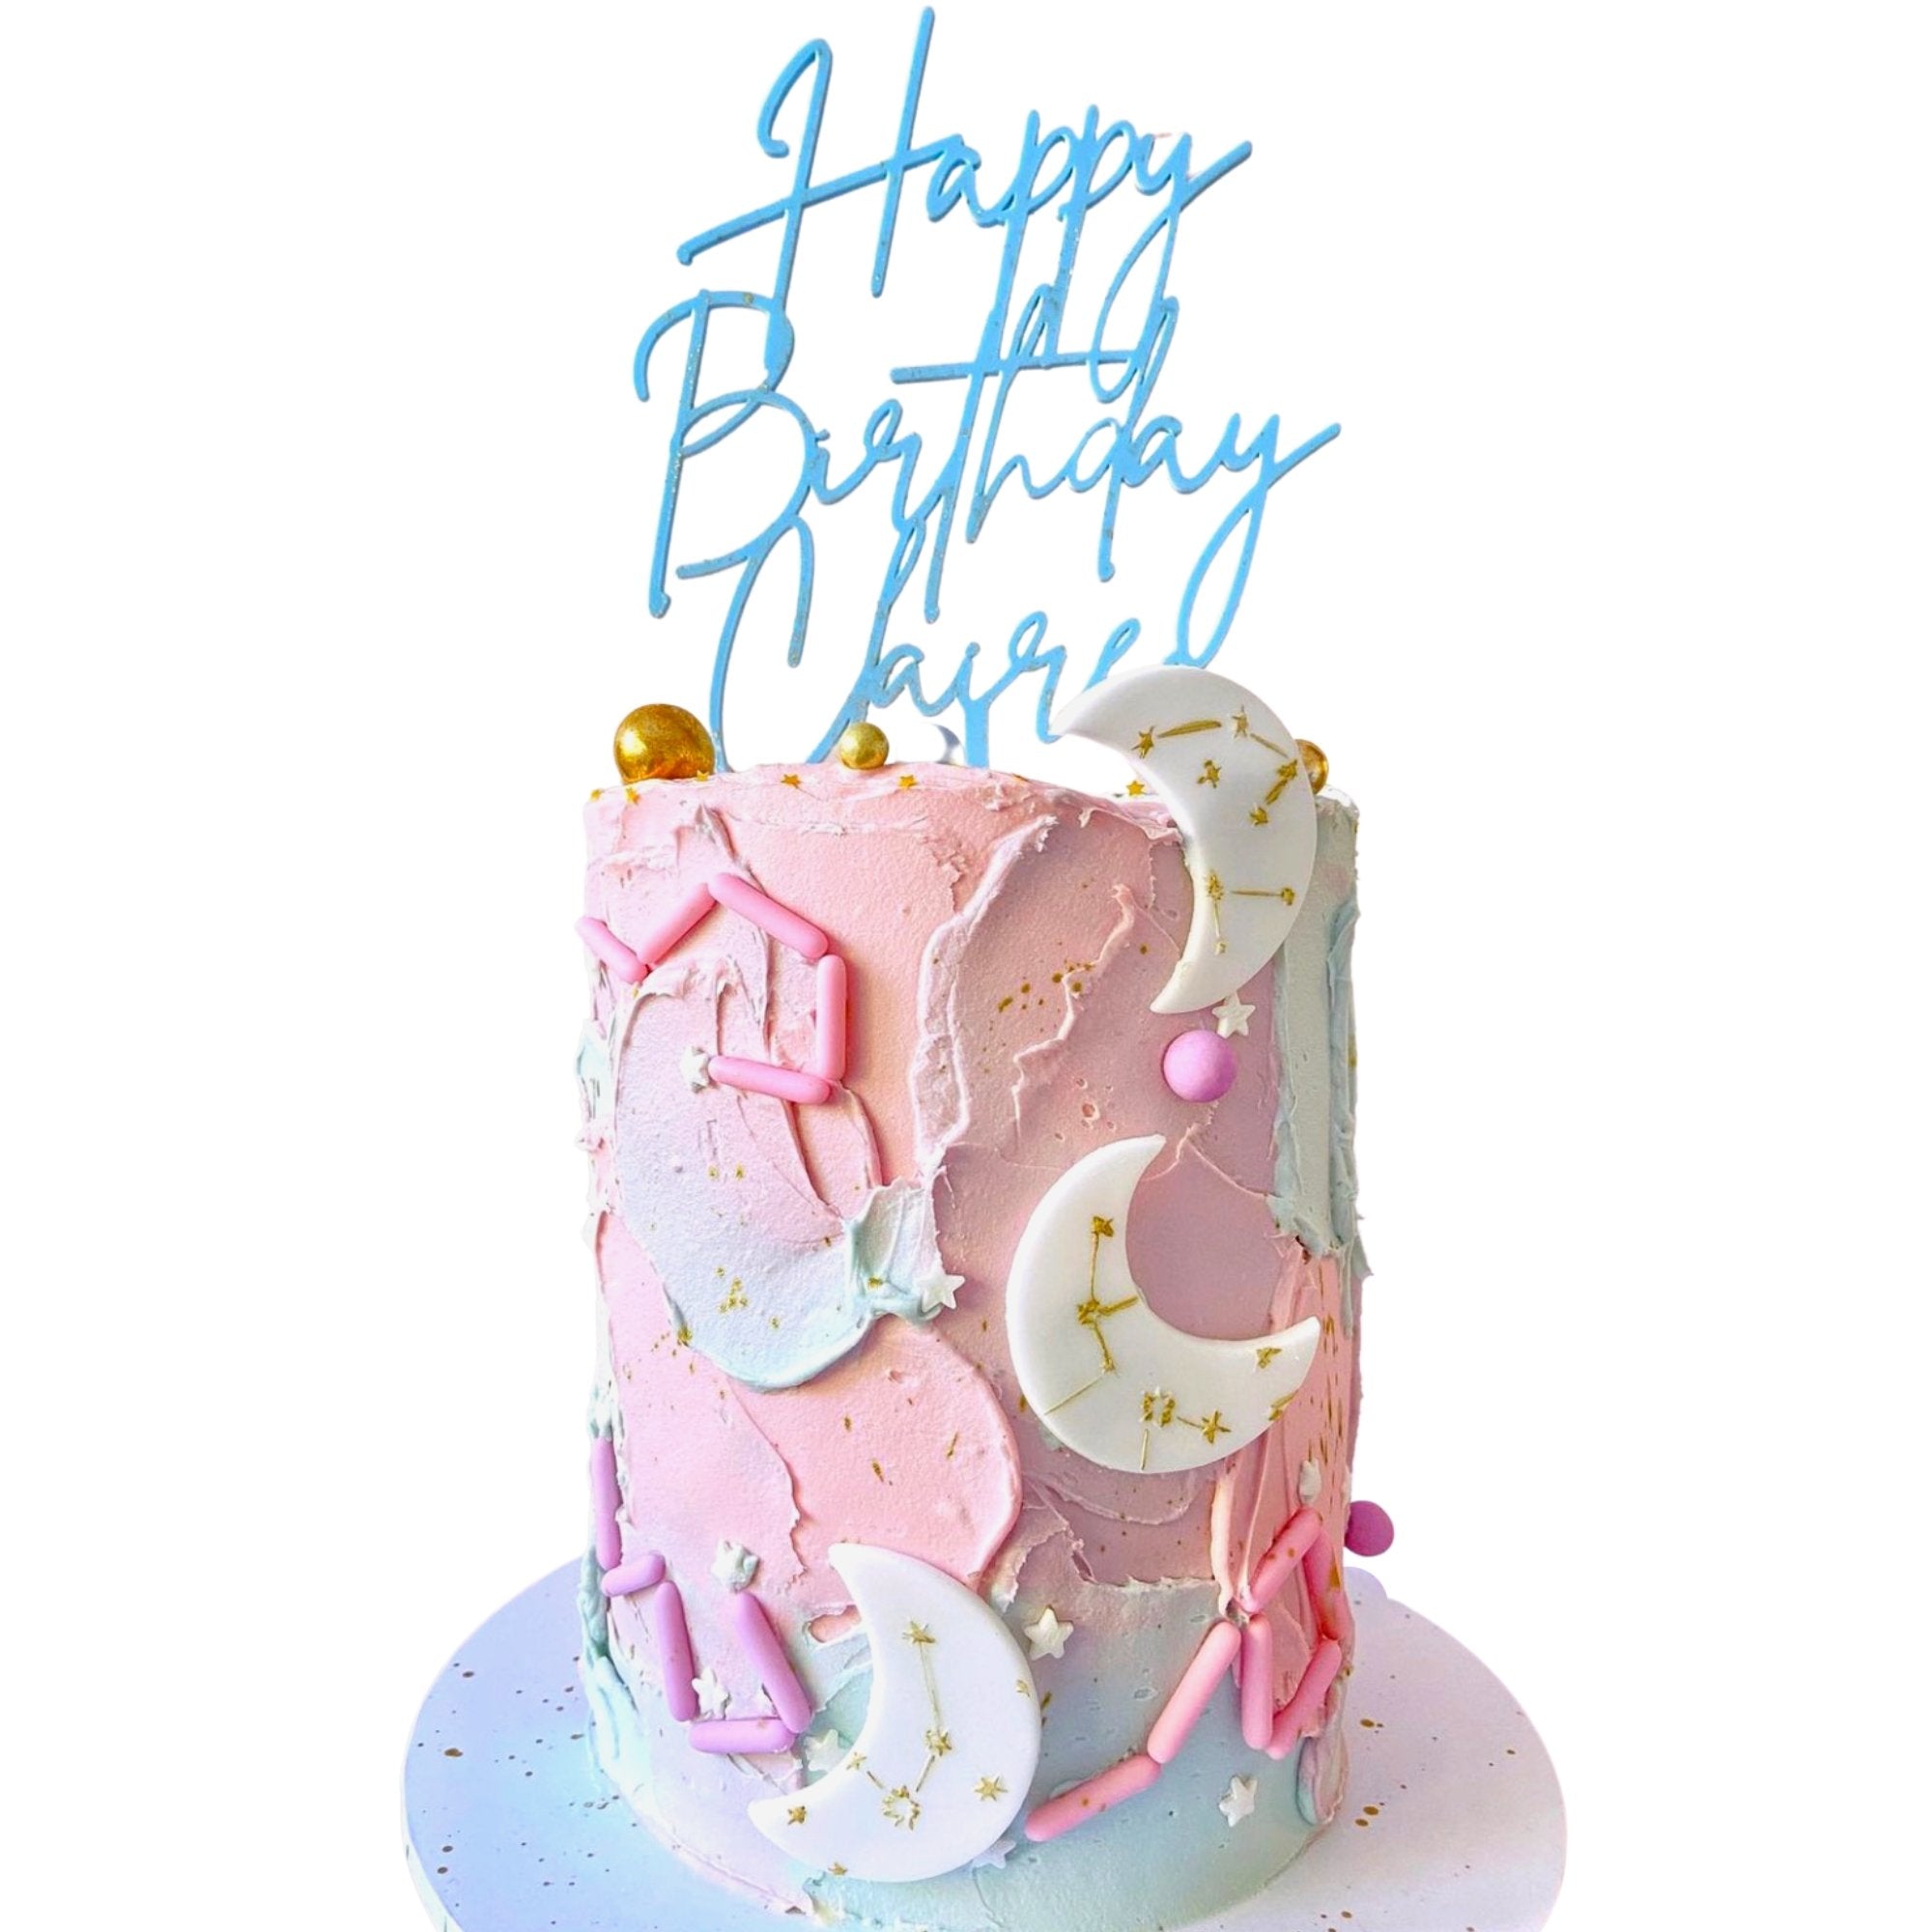 Happy Birthday- Double layer acrylic cake topper - Topptastic Ltd